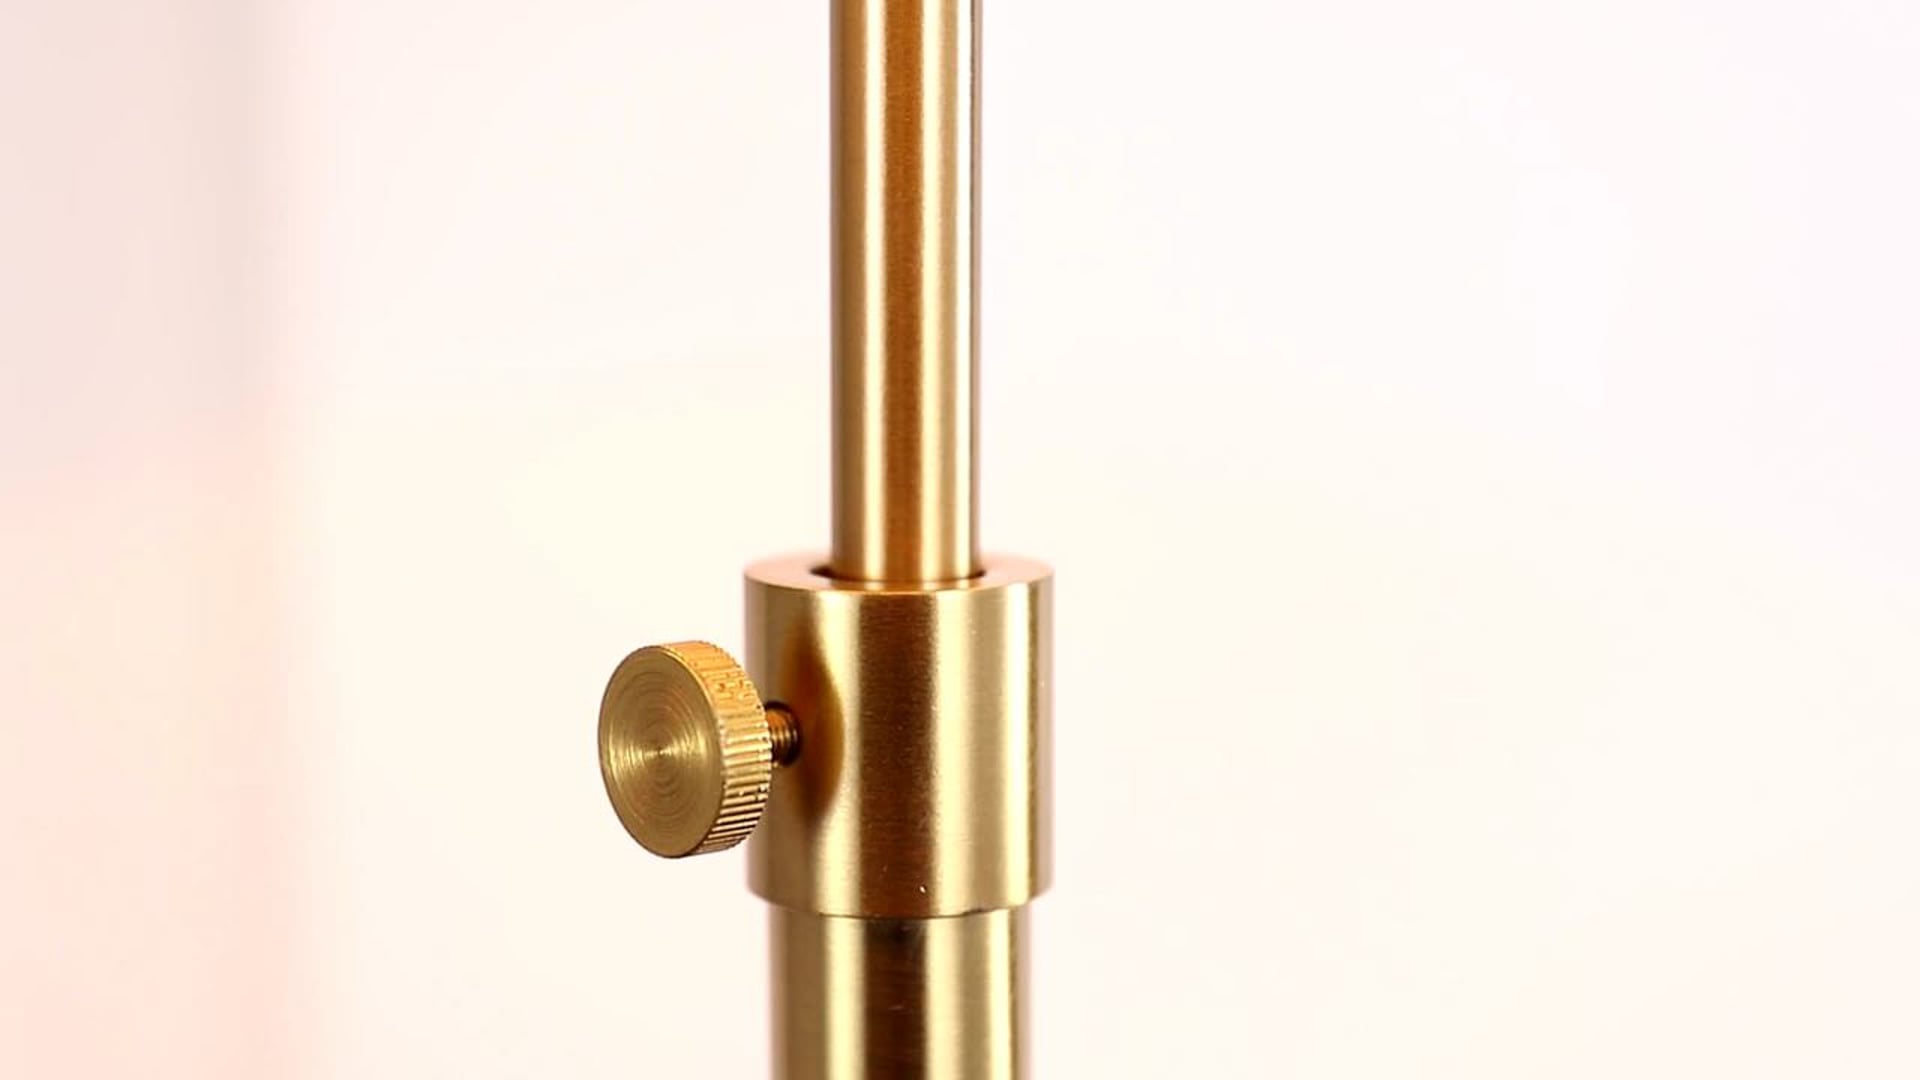 June Adjustable Metal/Marble LED Floor Lamp, Brass Gold/White